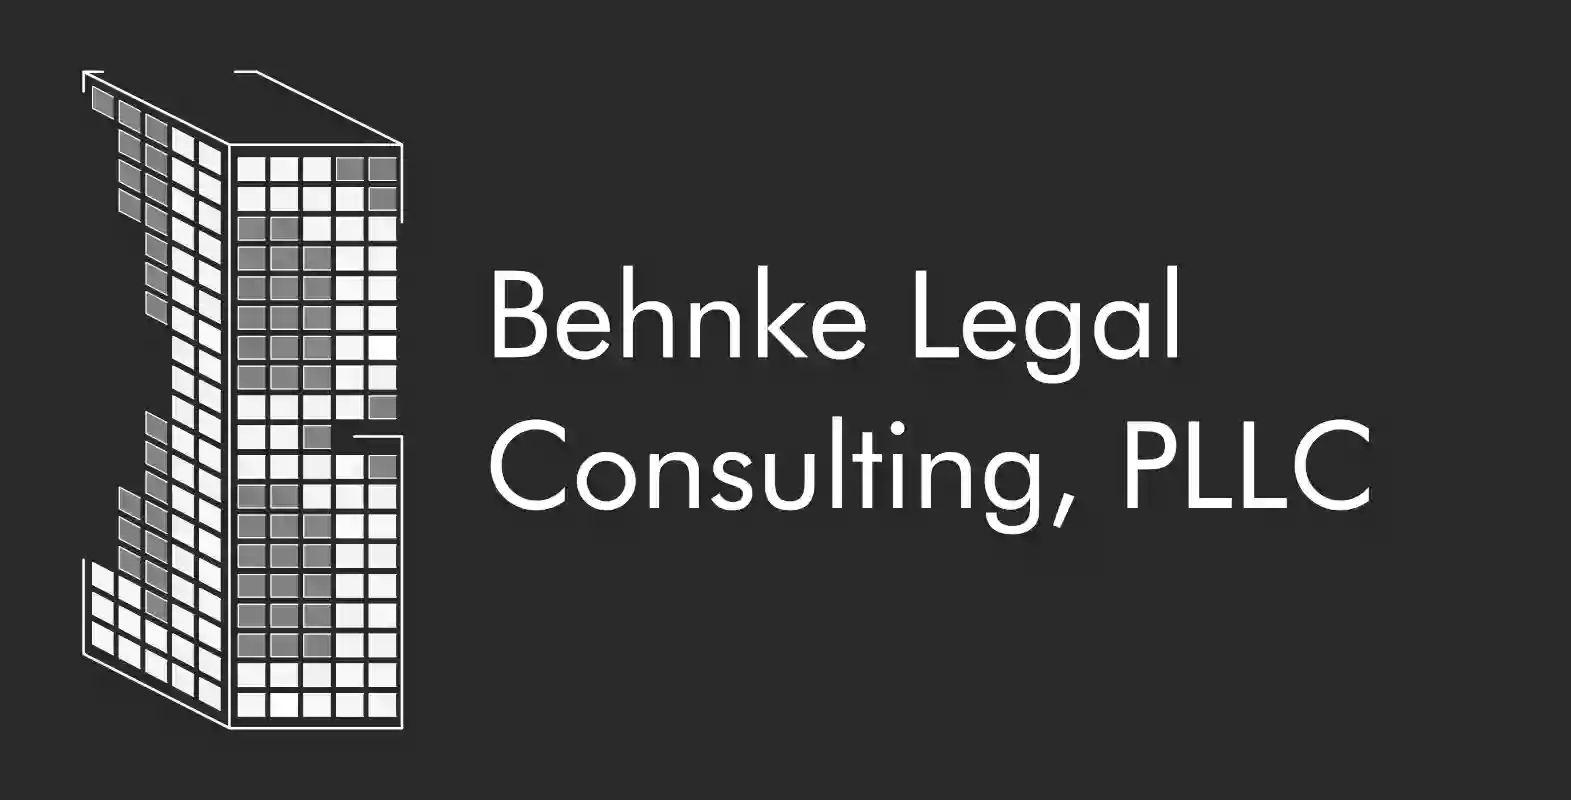 Behnke Legal Consulting